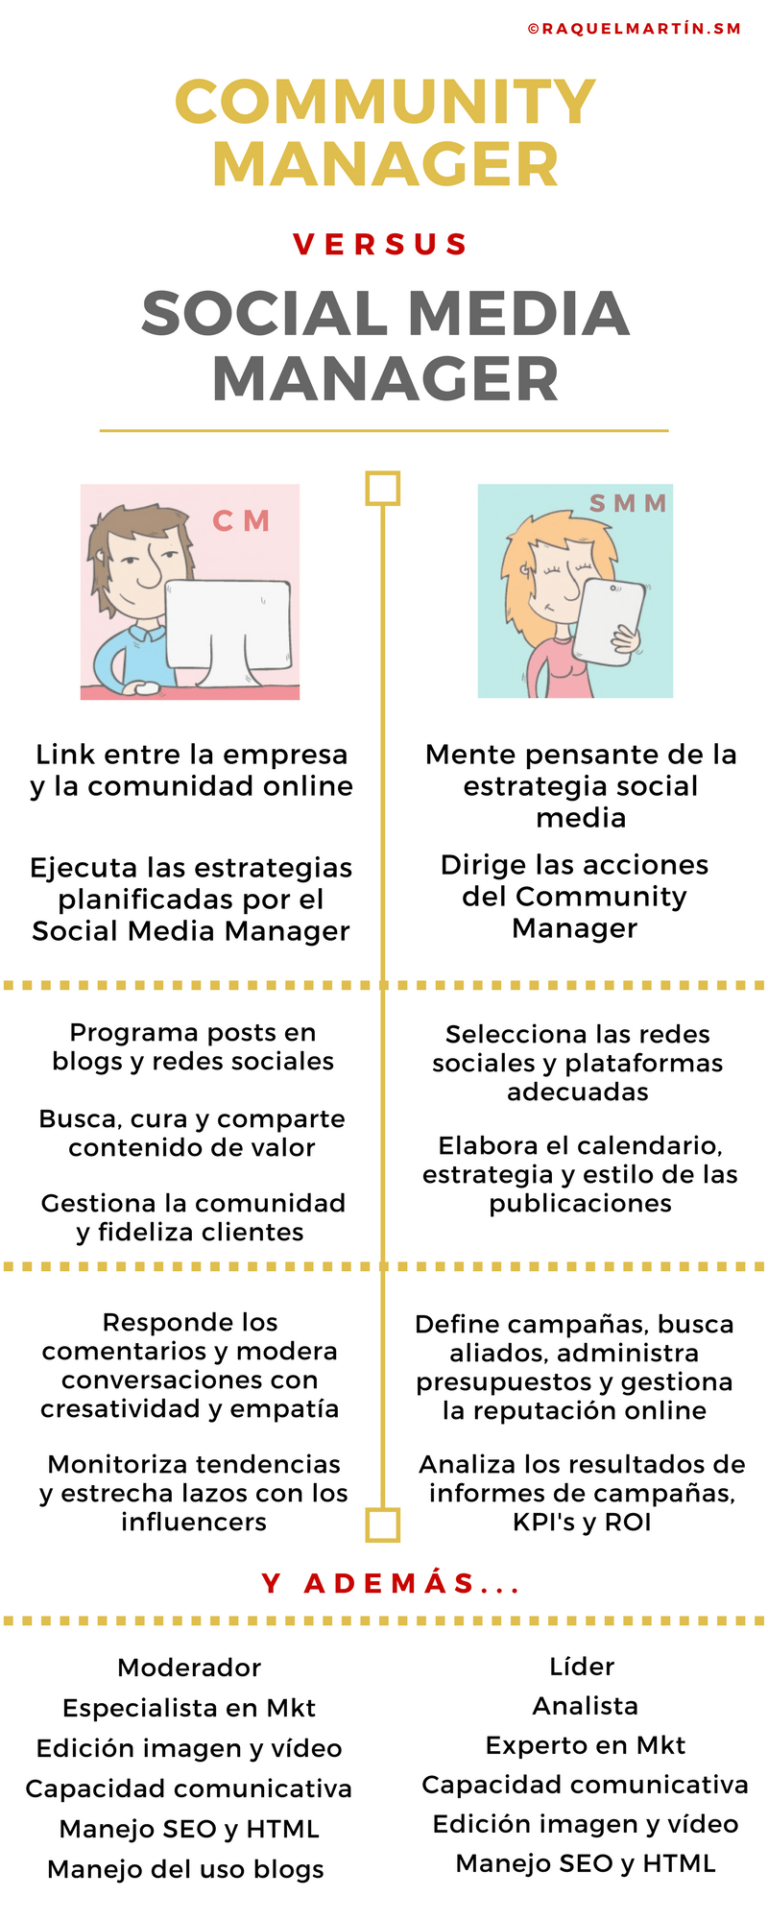 Infografia - Community Manager vs Social Media Manager #infografia #infographic #socialmedia - TICs y Formación